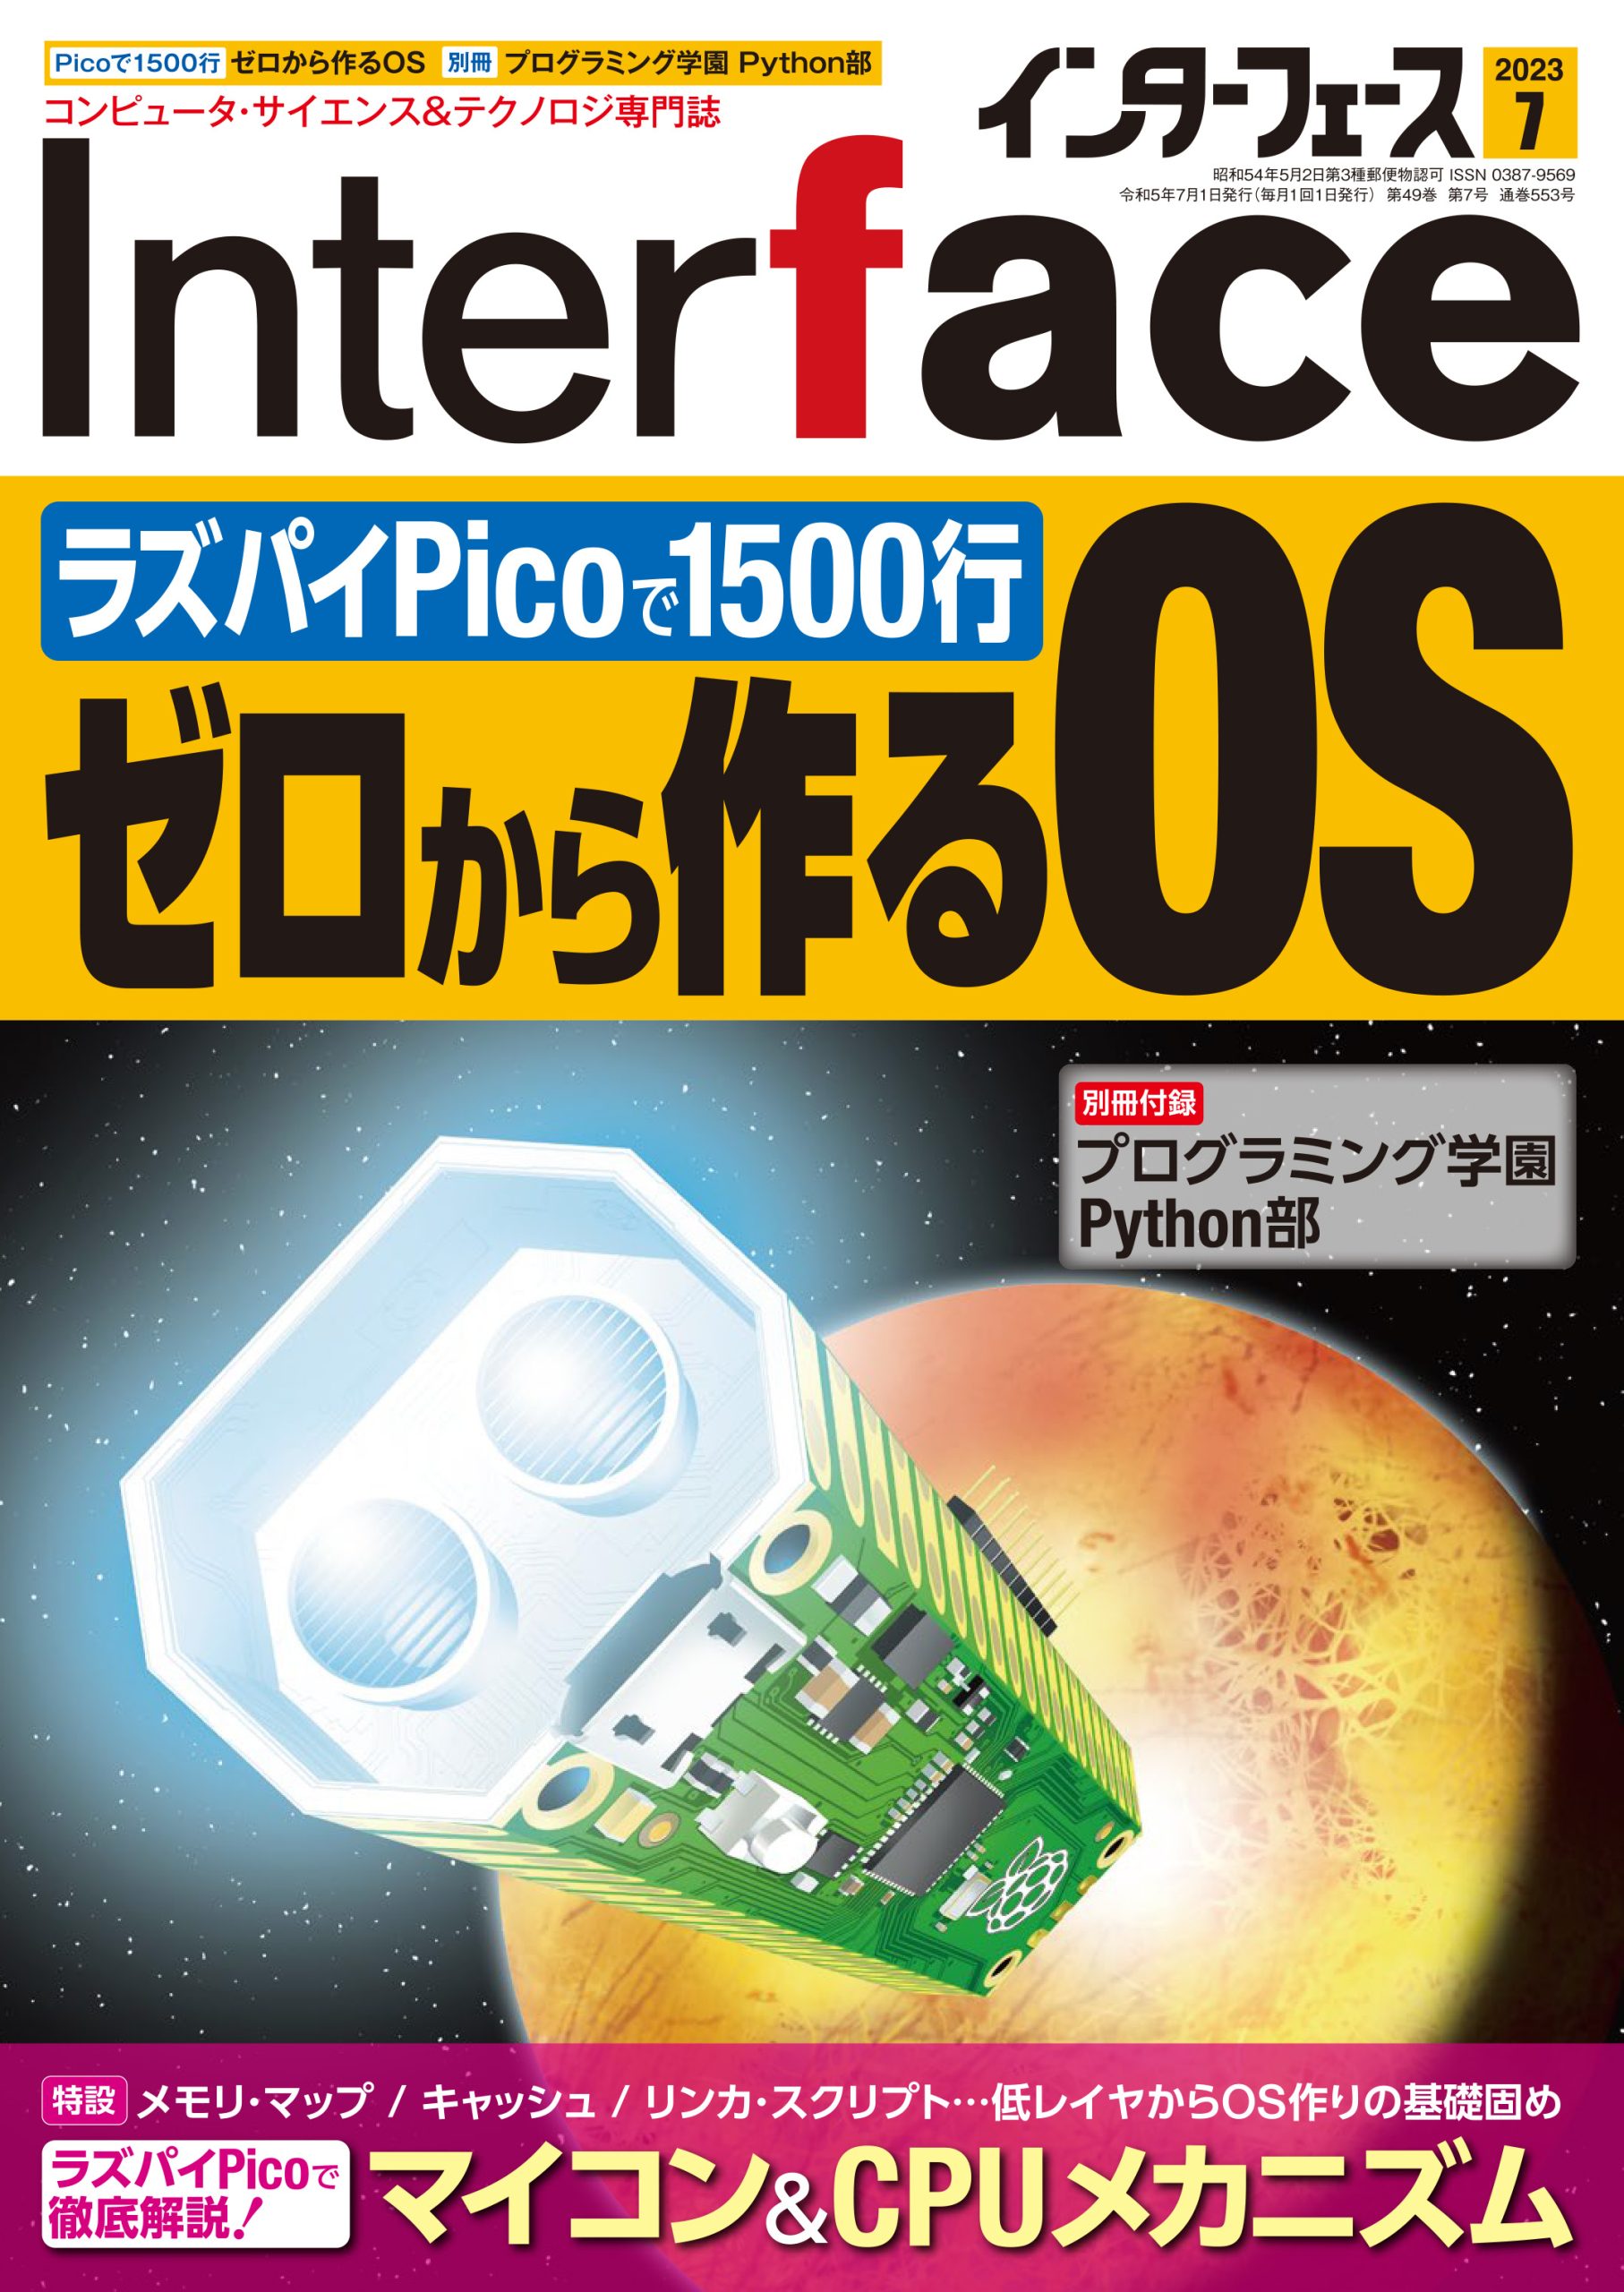 Interface 2017 DVD インターフェース バックナンバー CD - 通販 